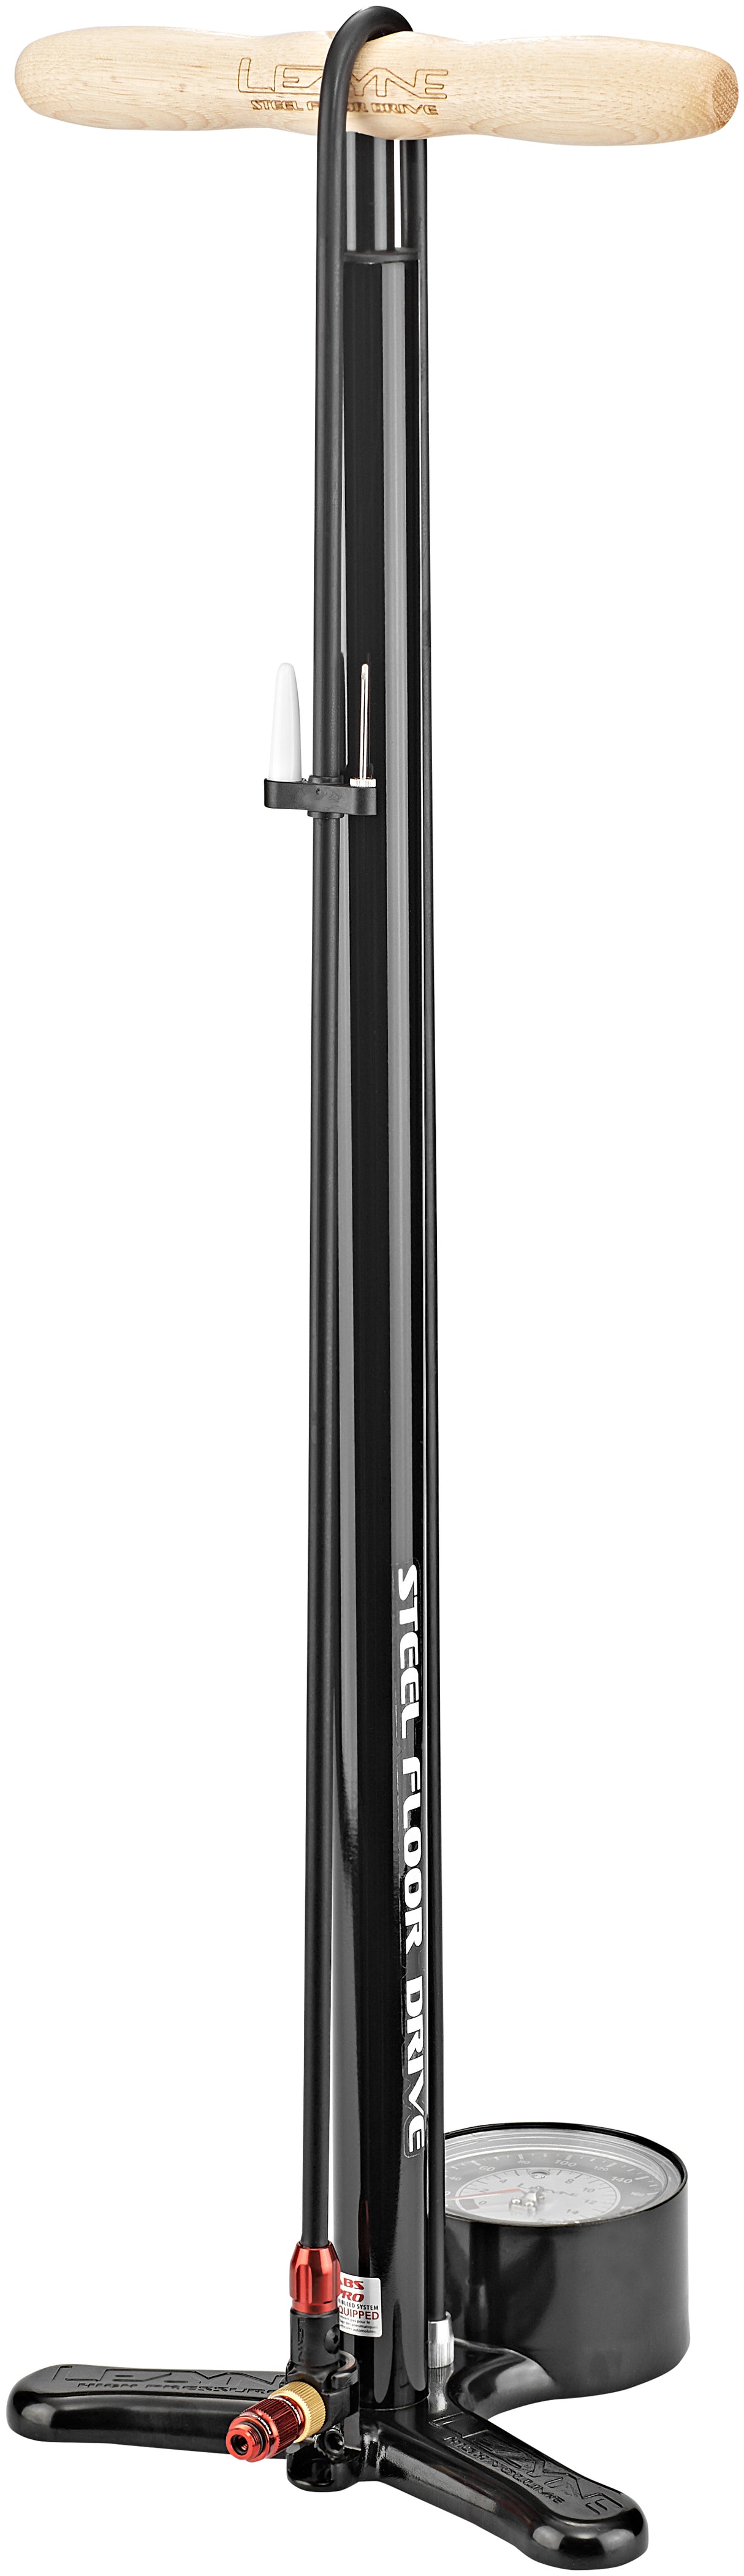 Lezyne Steel Floor Drive Tall pompe à pied noir